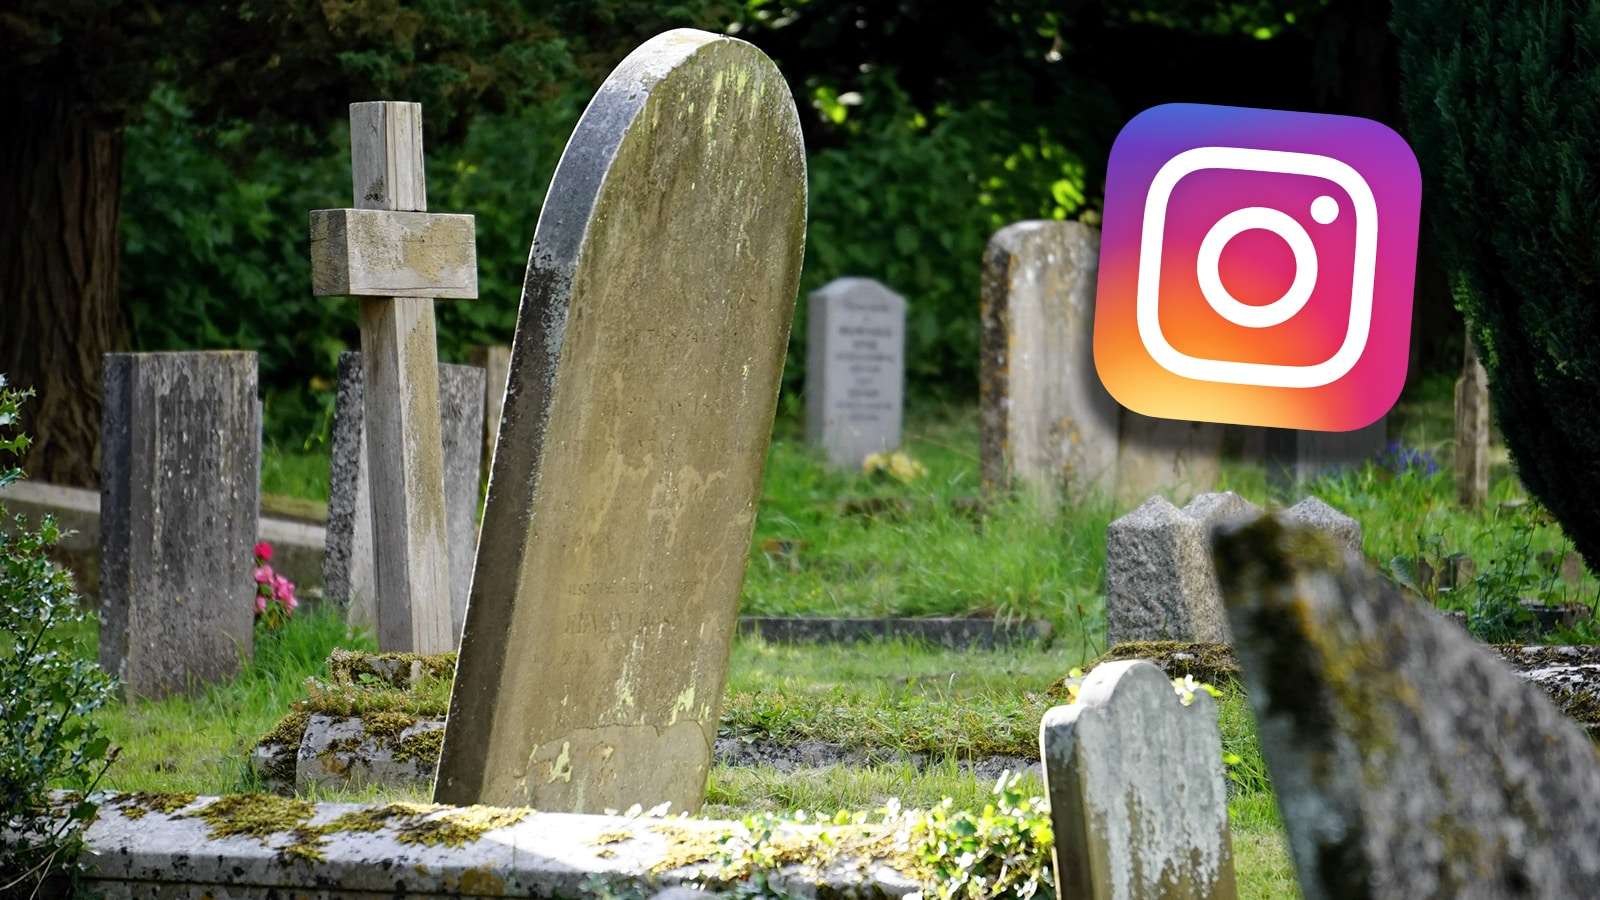 Instagram marks youtubers as deceased accident